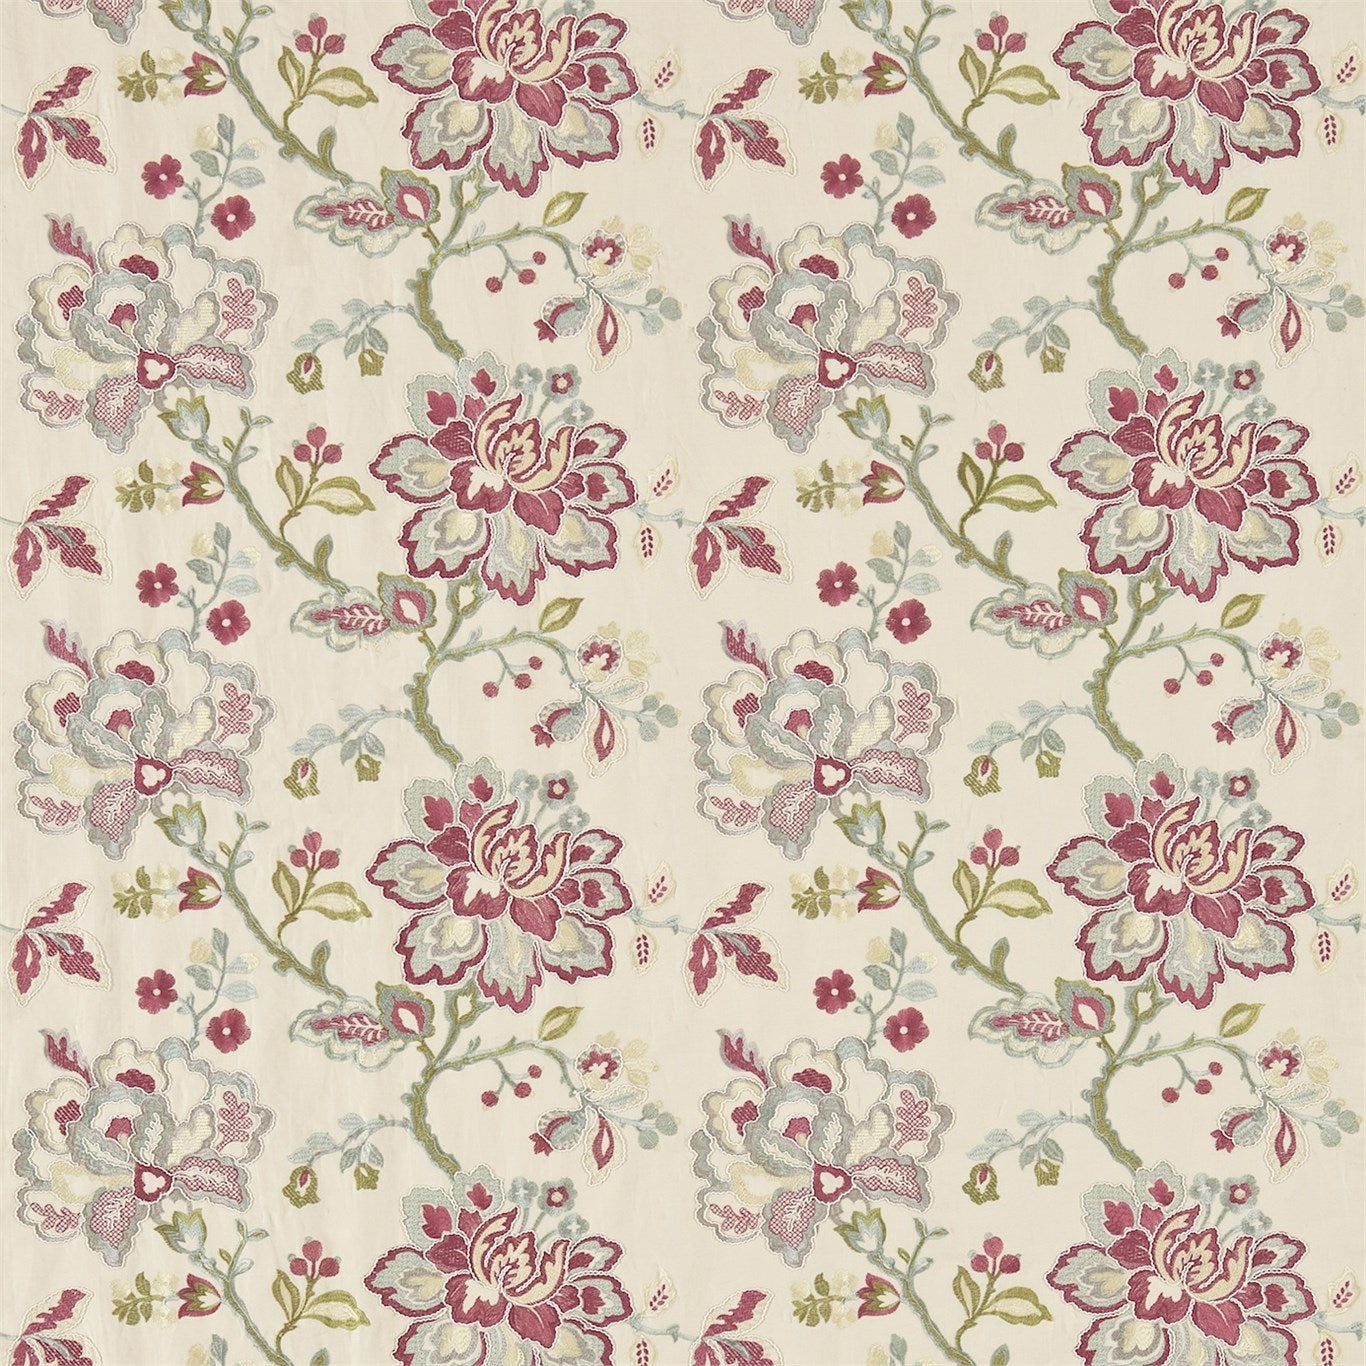 Angelique Fabric by Sanderson - DFAB233997 - Rose/Aqua